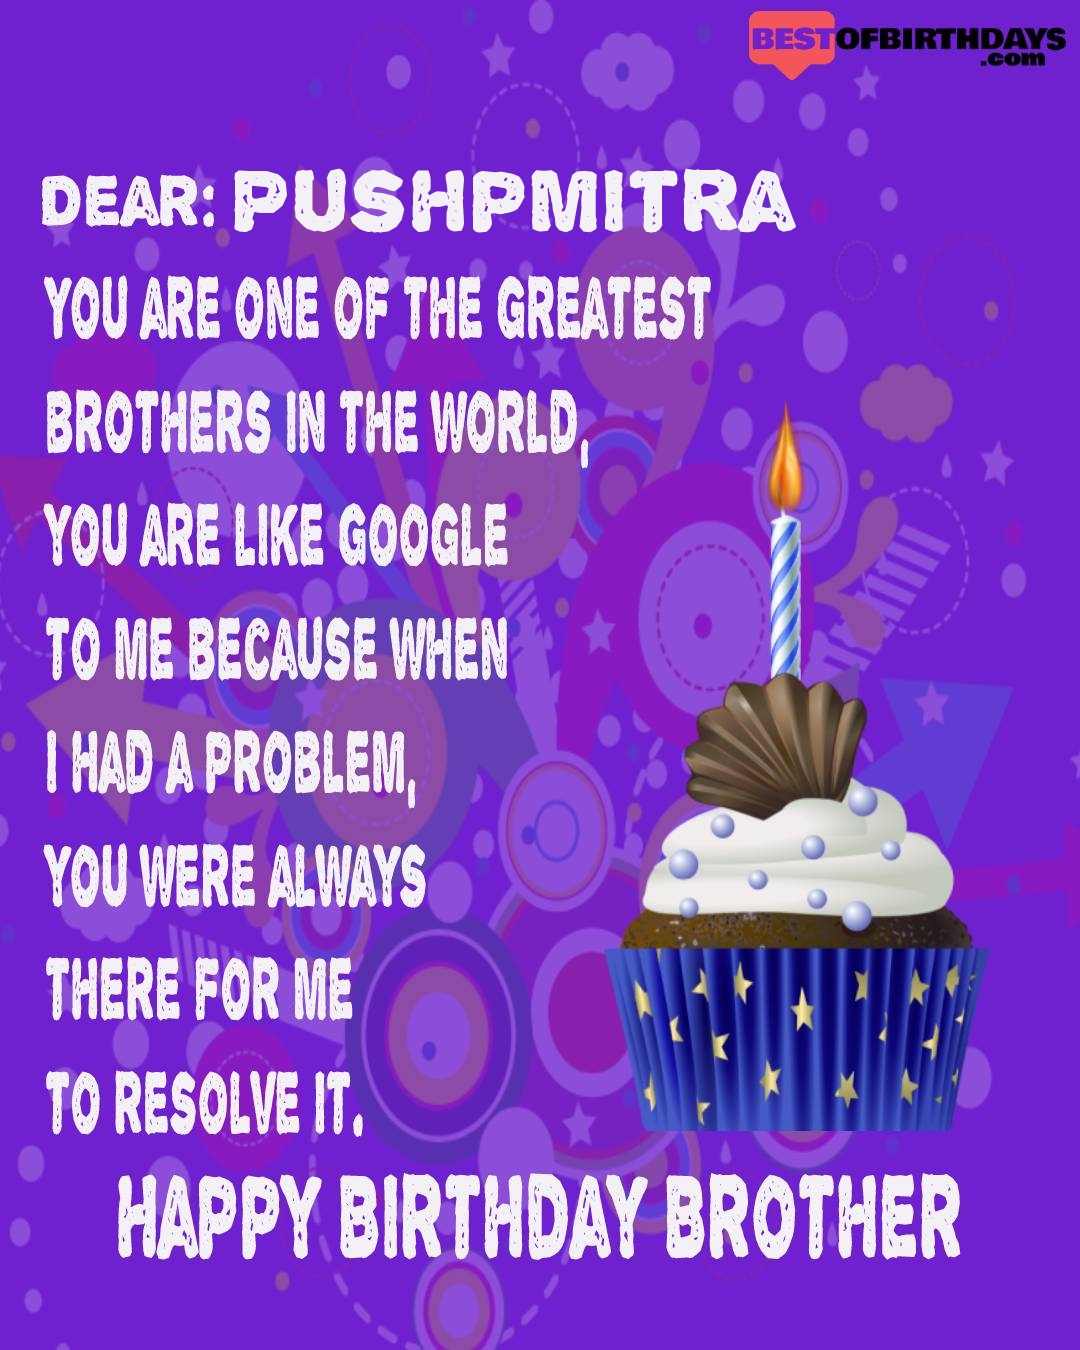 Happy birthday pushpmitra bhai brother bro